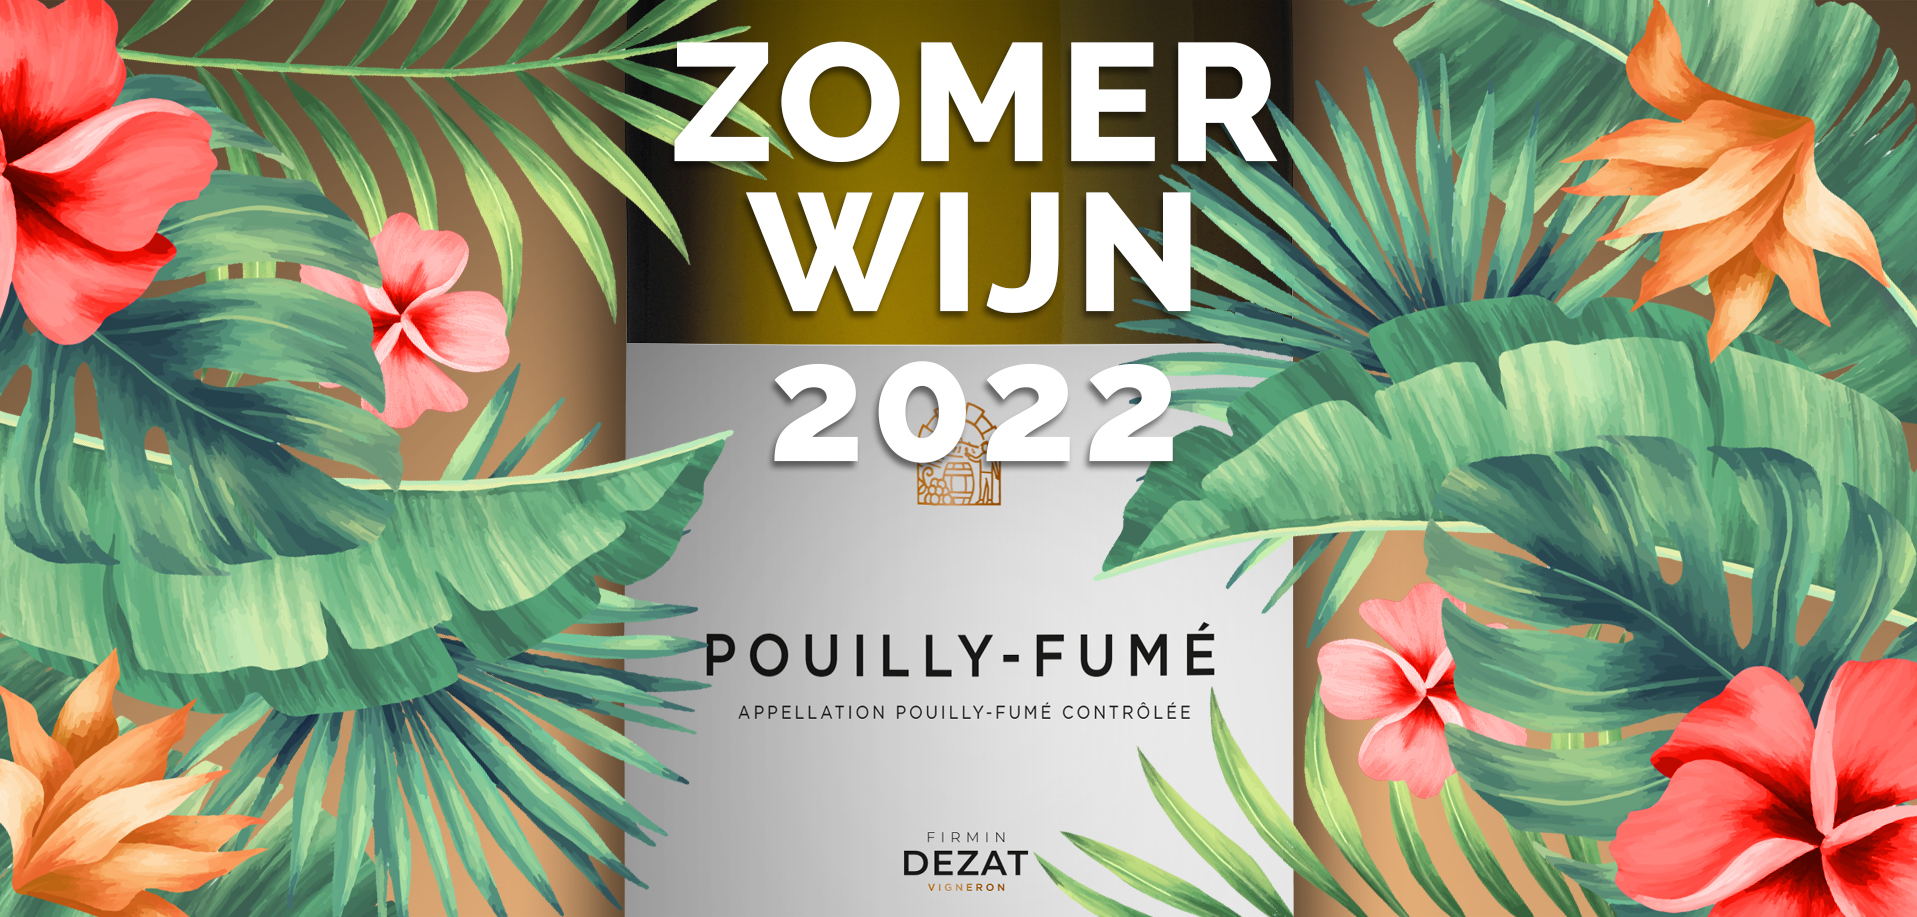 Pouilly-Fumé van Firmin Dezat verkozen tot zomerwijn 2022